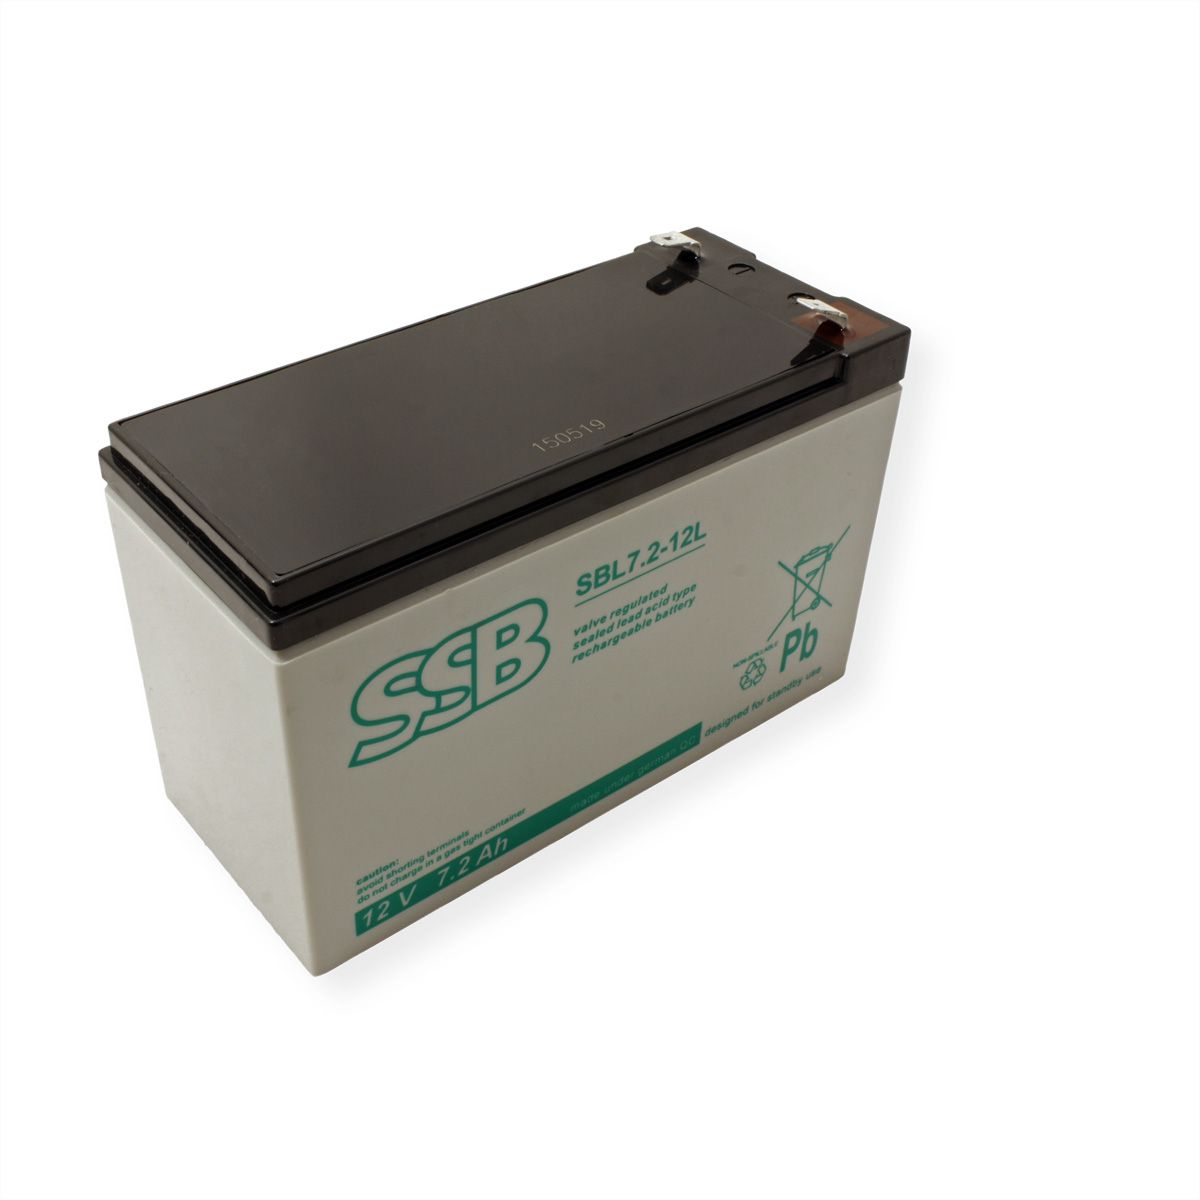 Special Battery For Ups 12v 7ah Secomp International